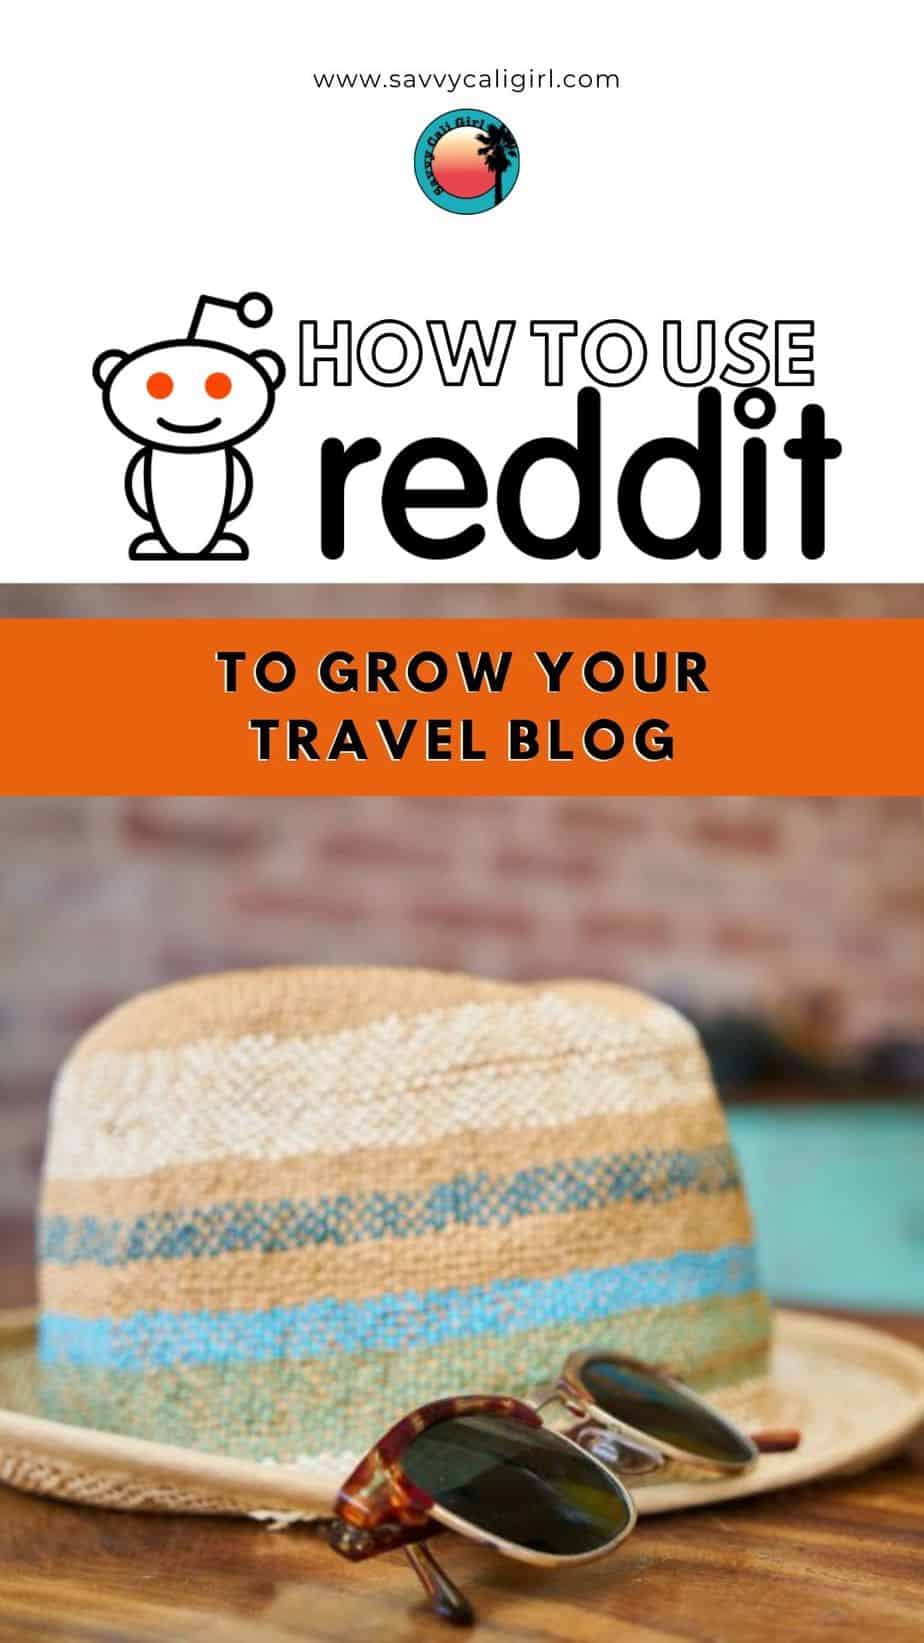 reddit travel lifehacks